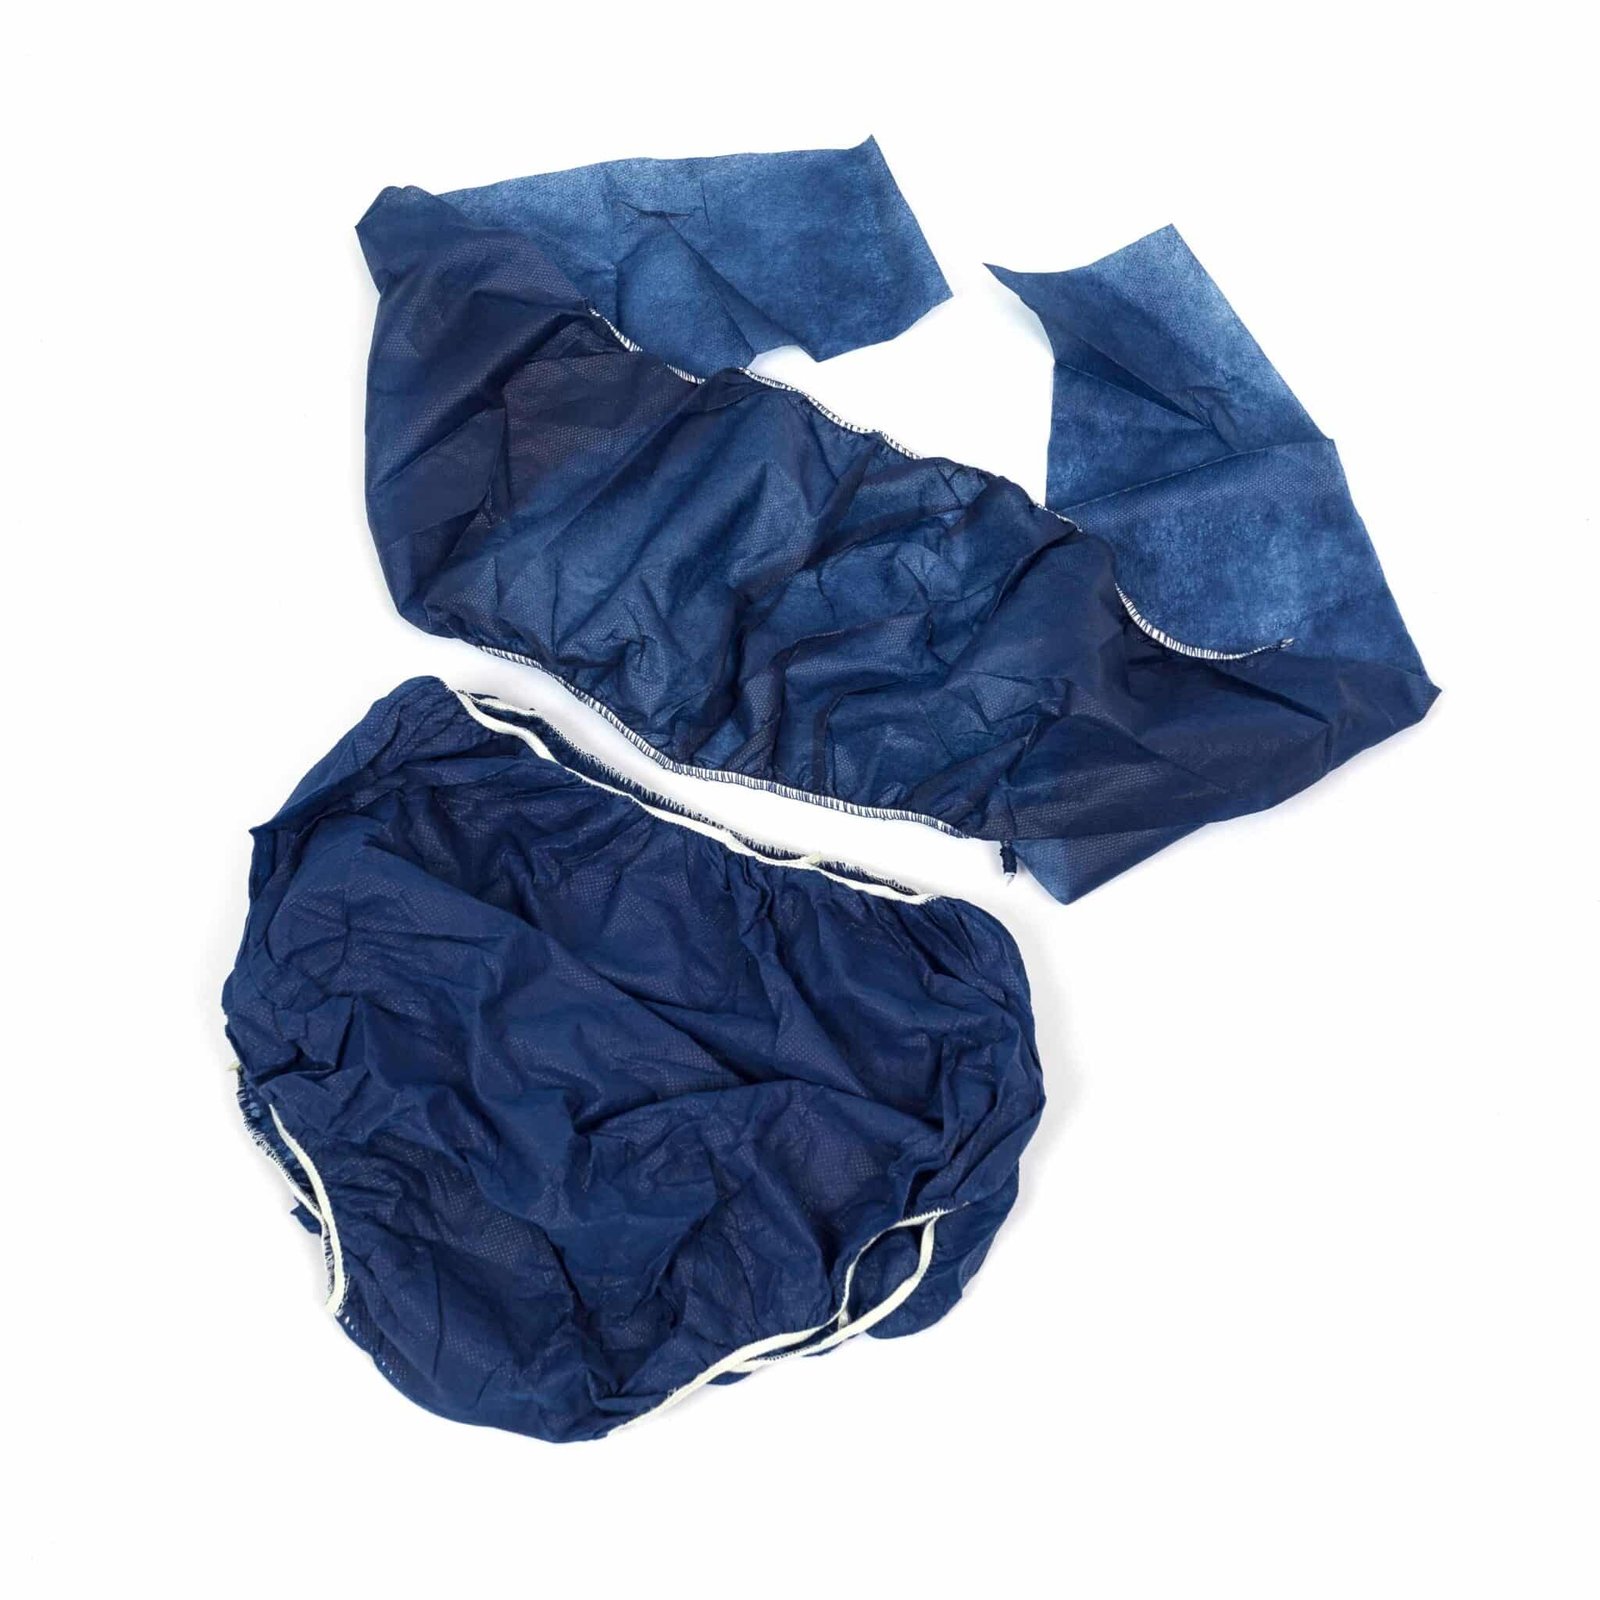 Disposable Top Underwear Disposable Brassieres 10pcs Disposable Non Woven  Fabric Disposable Beauty Salon Brassieres Top Underwear For Women 